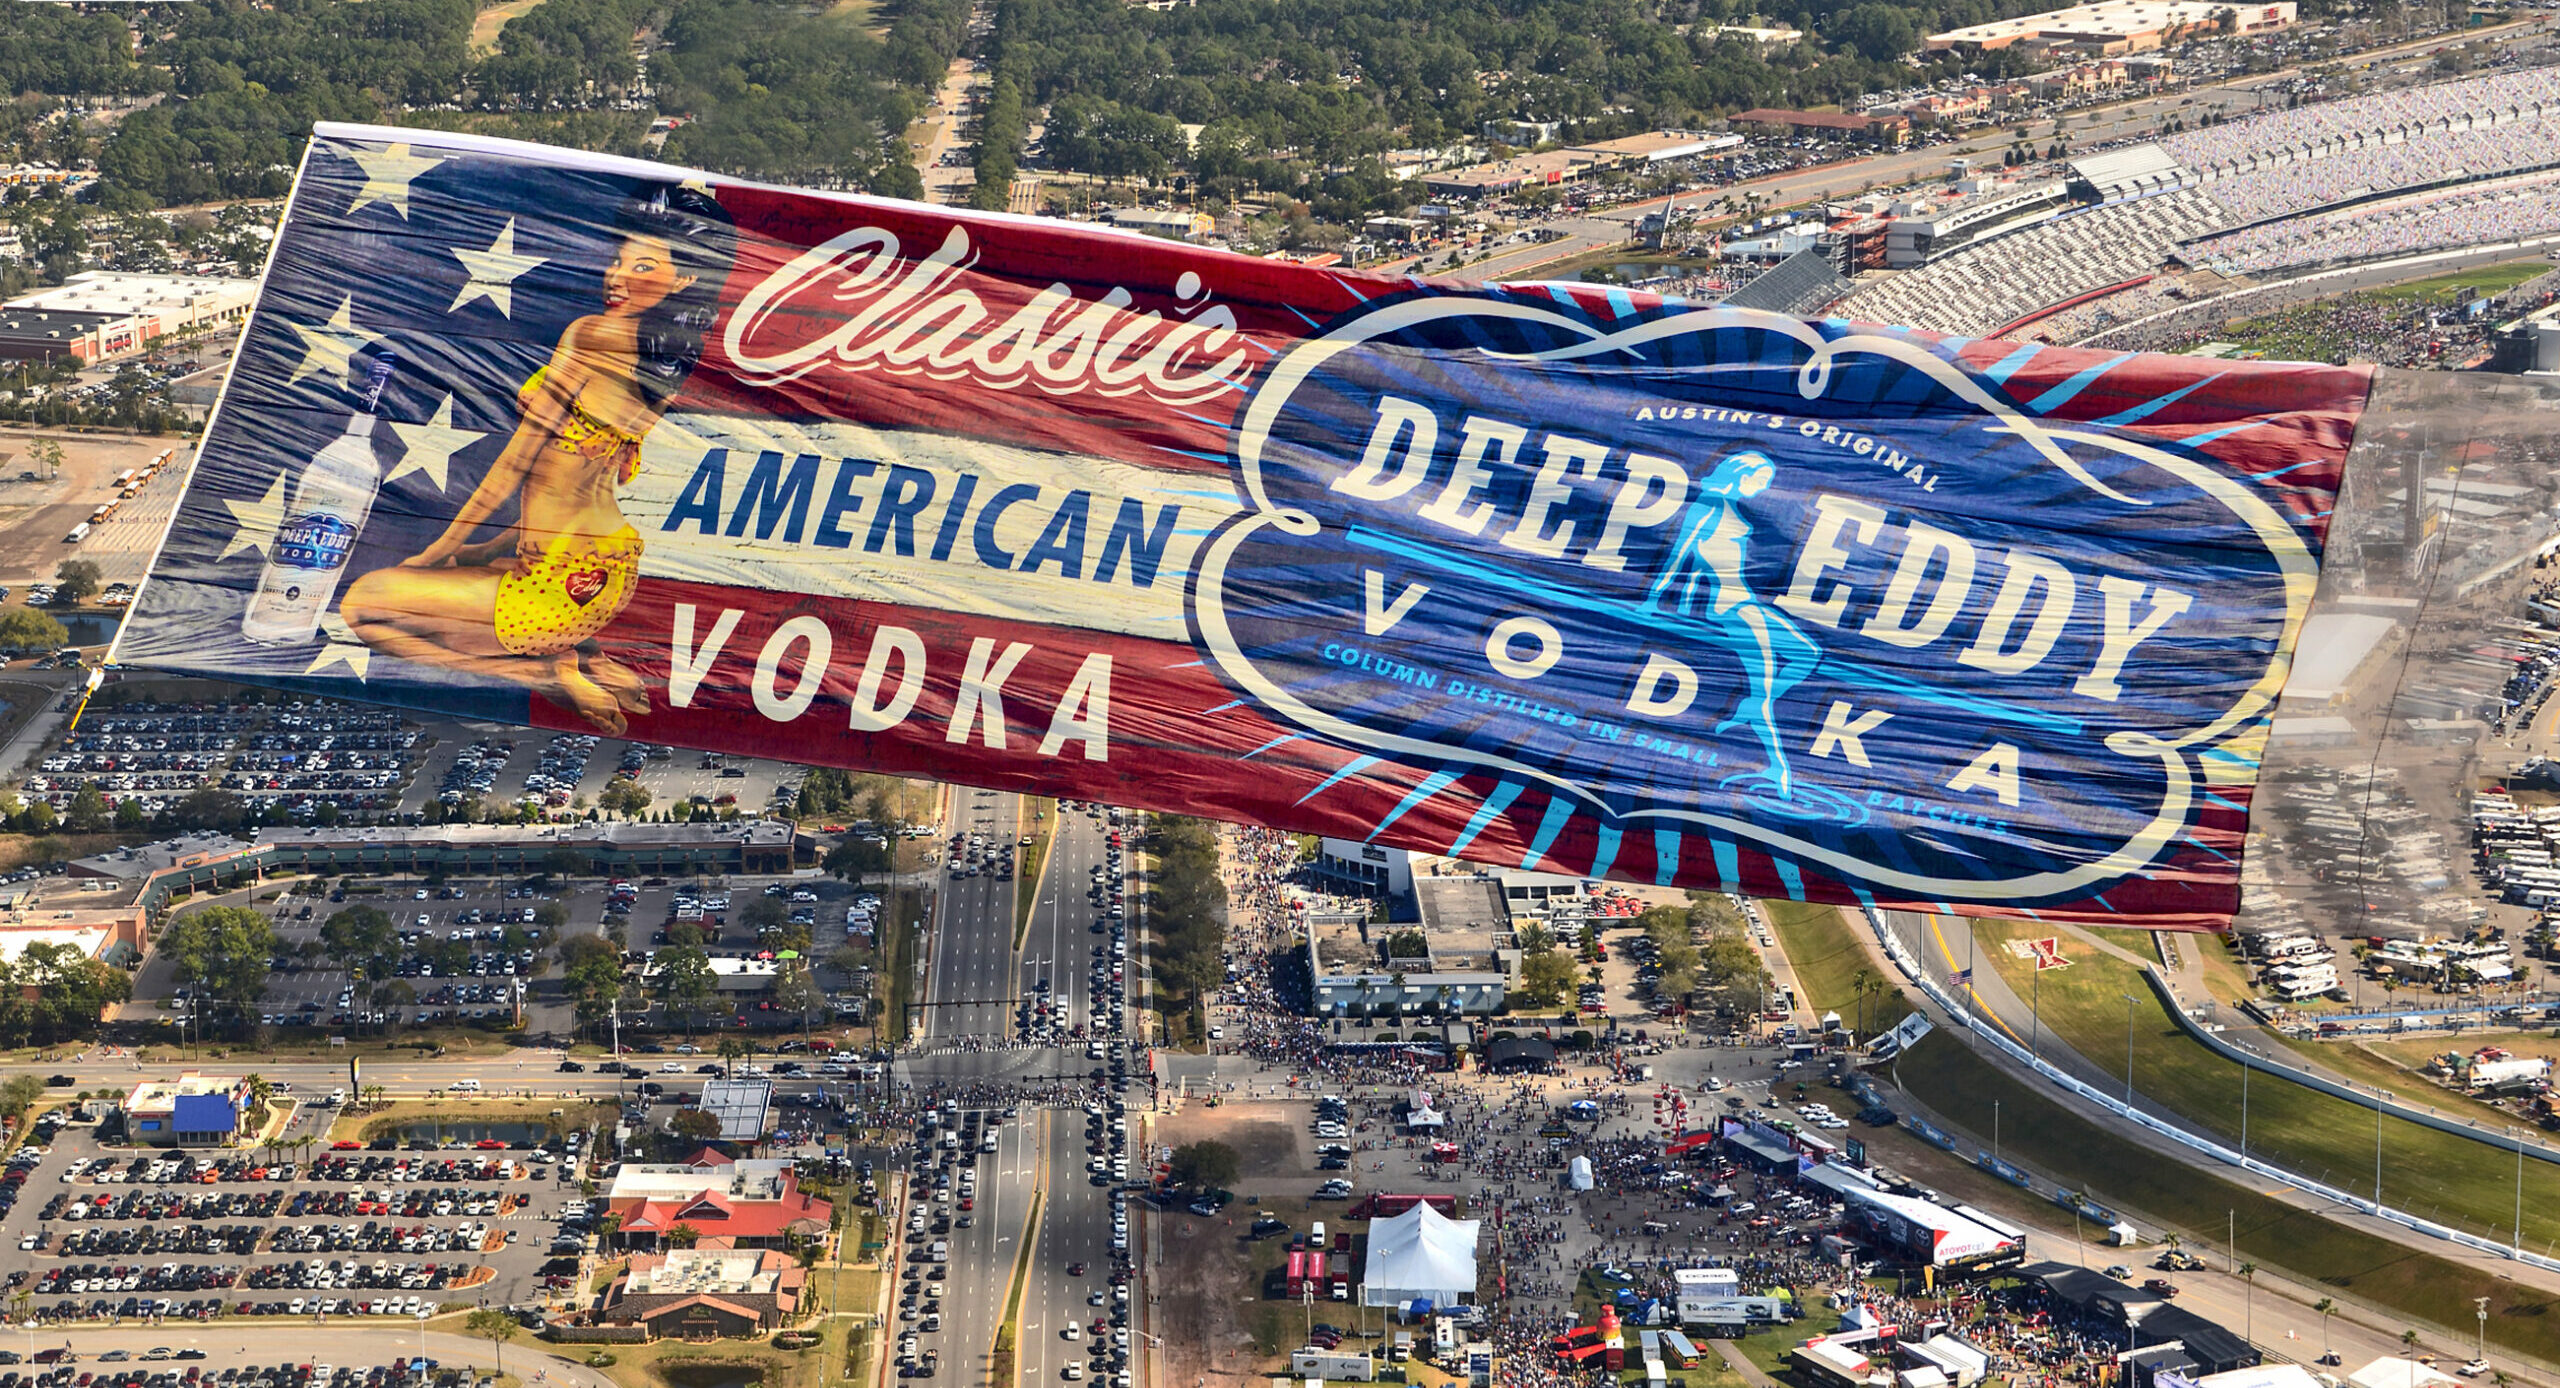 Deep Eddy Aerial Billboard over NASCAR race